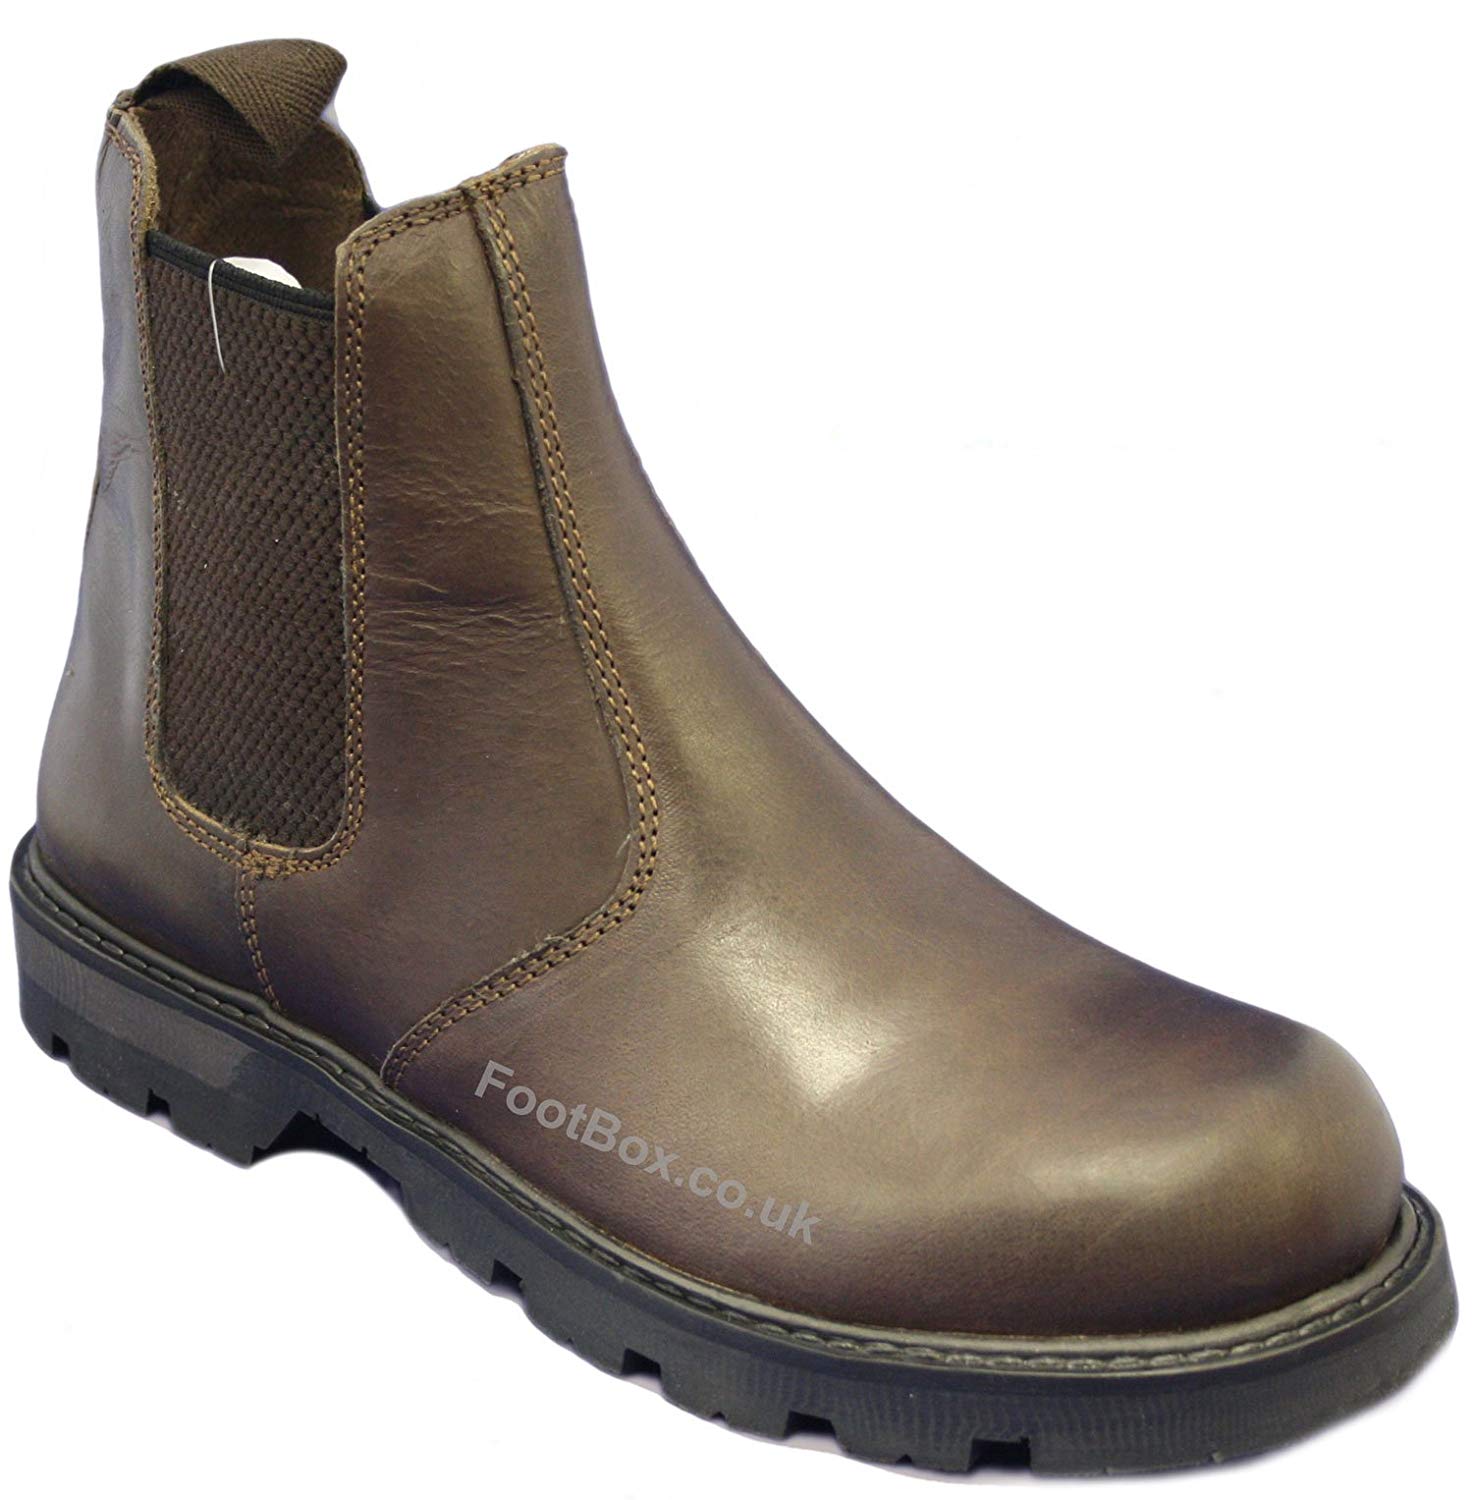 oaktrak boots